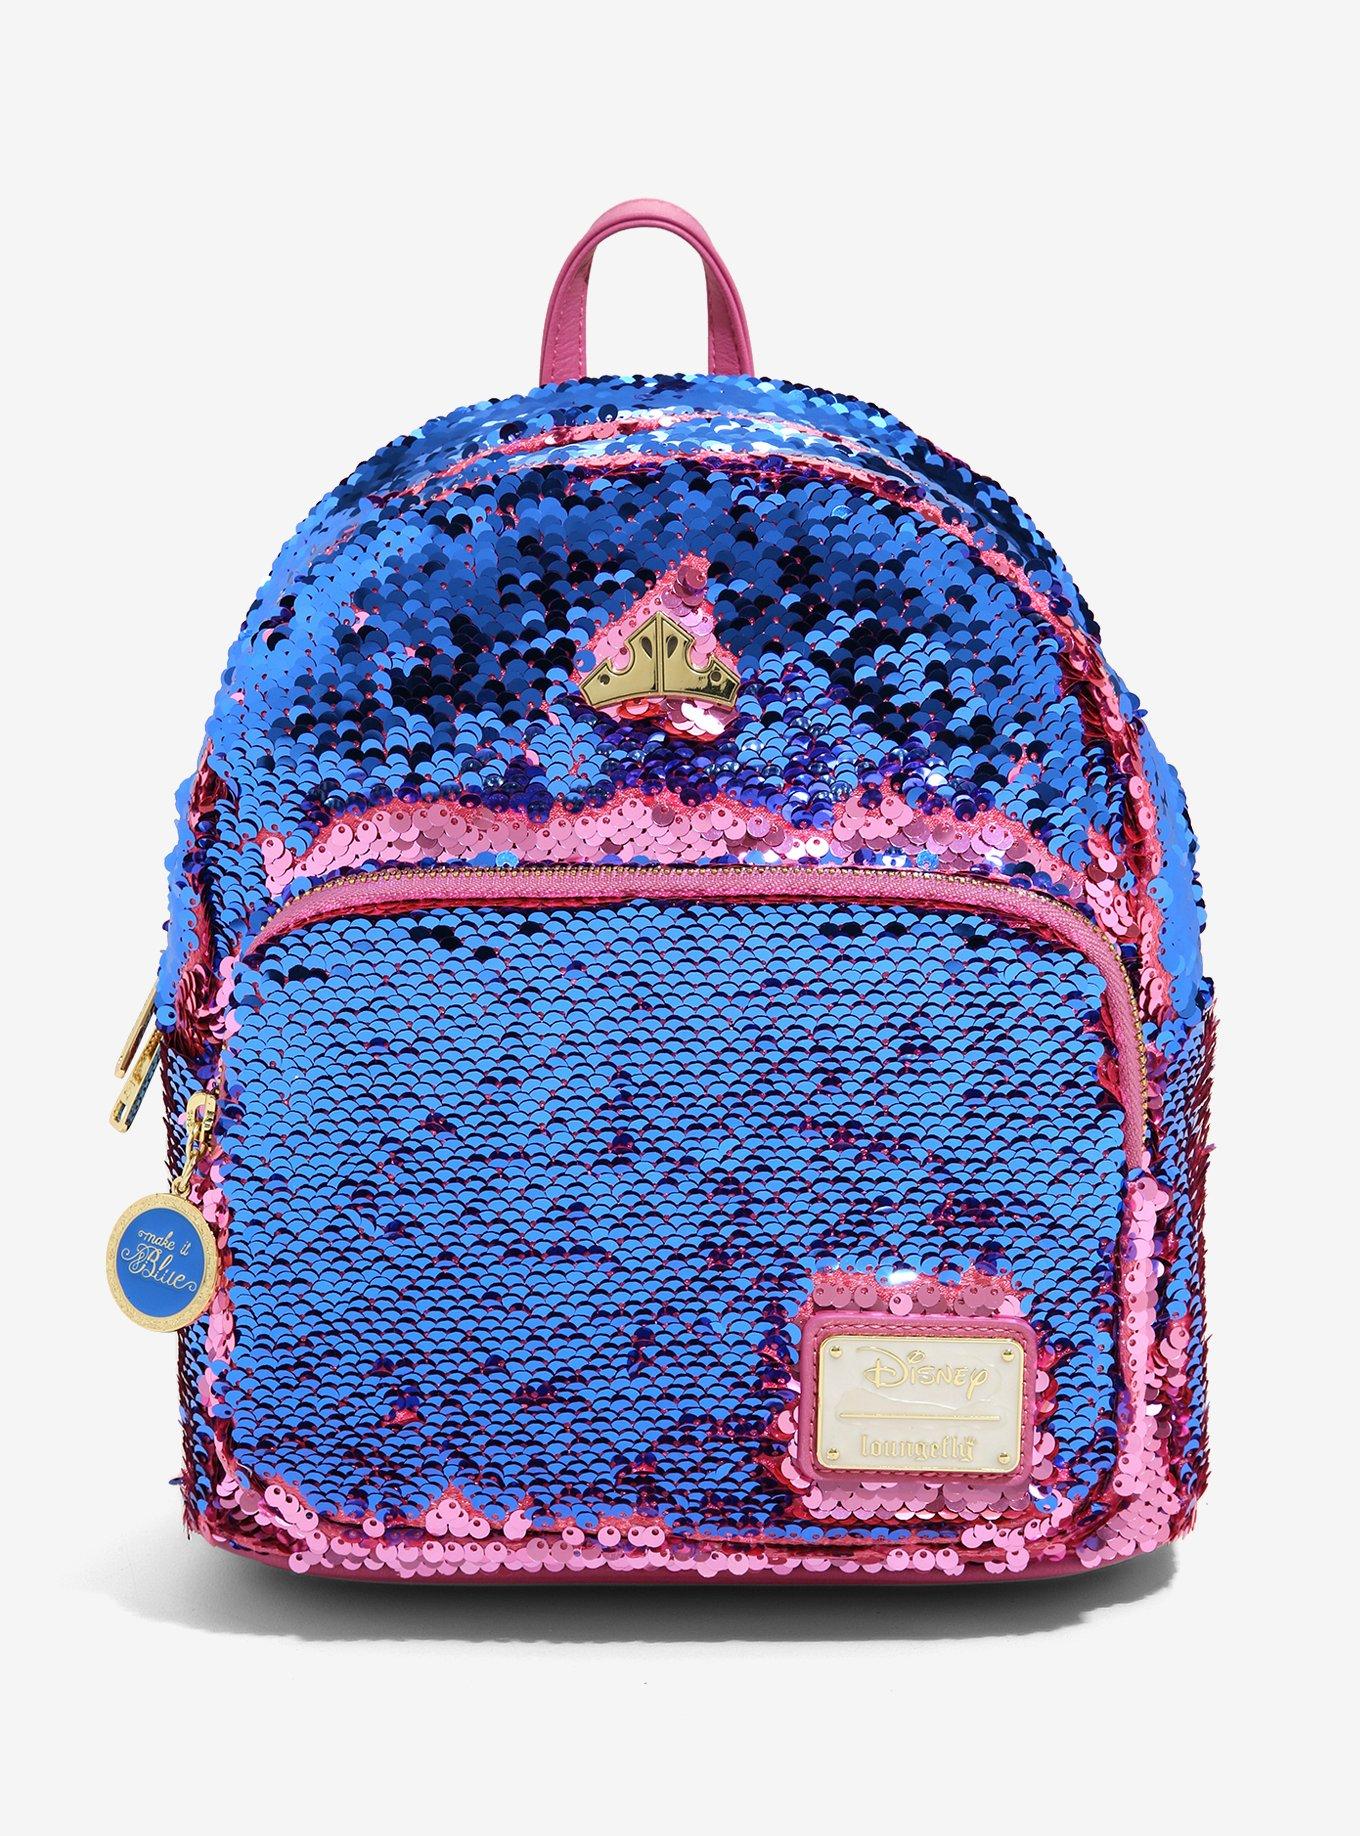 aurora loungefly backpack